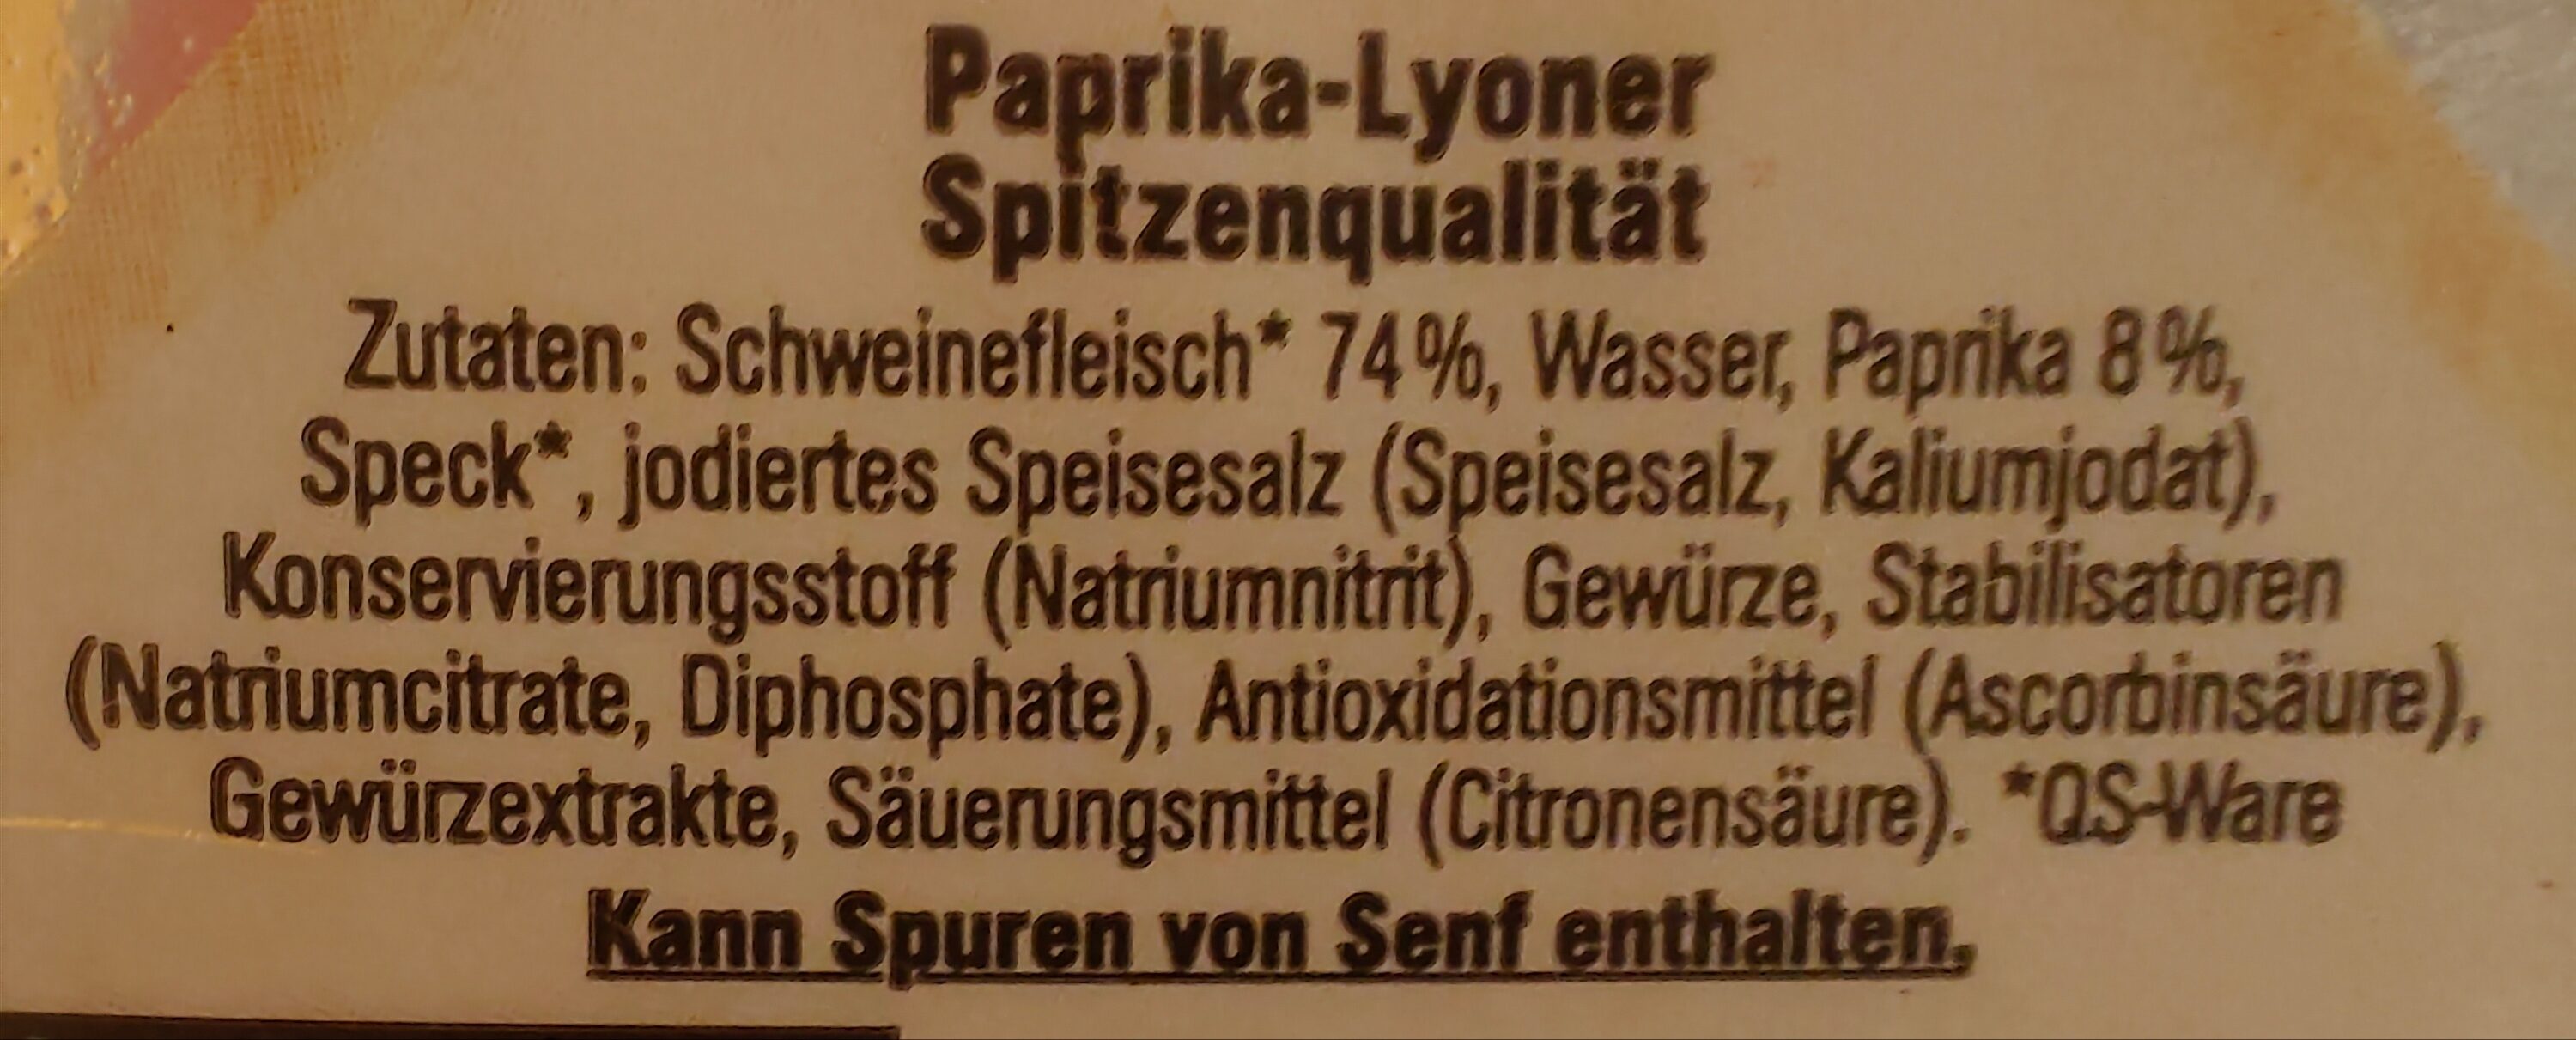 Paprika Lyoner - Zutaten